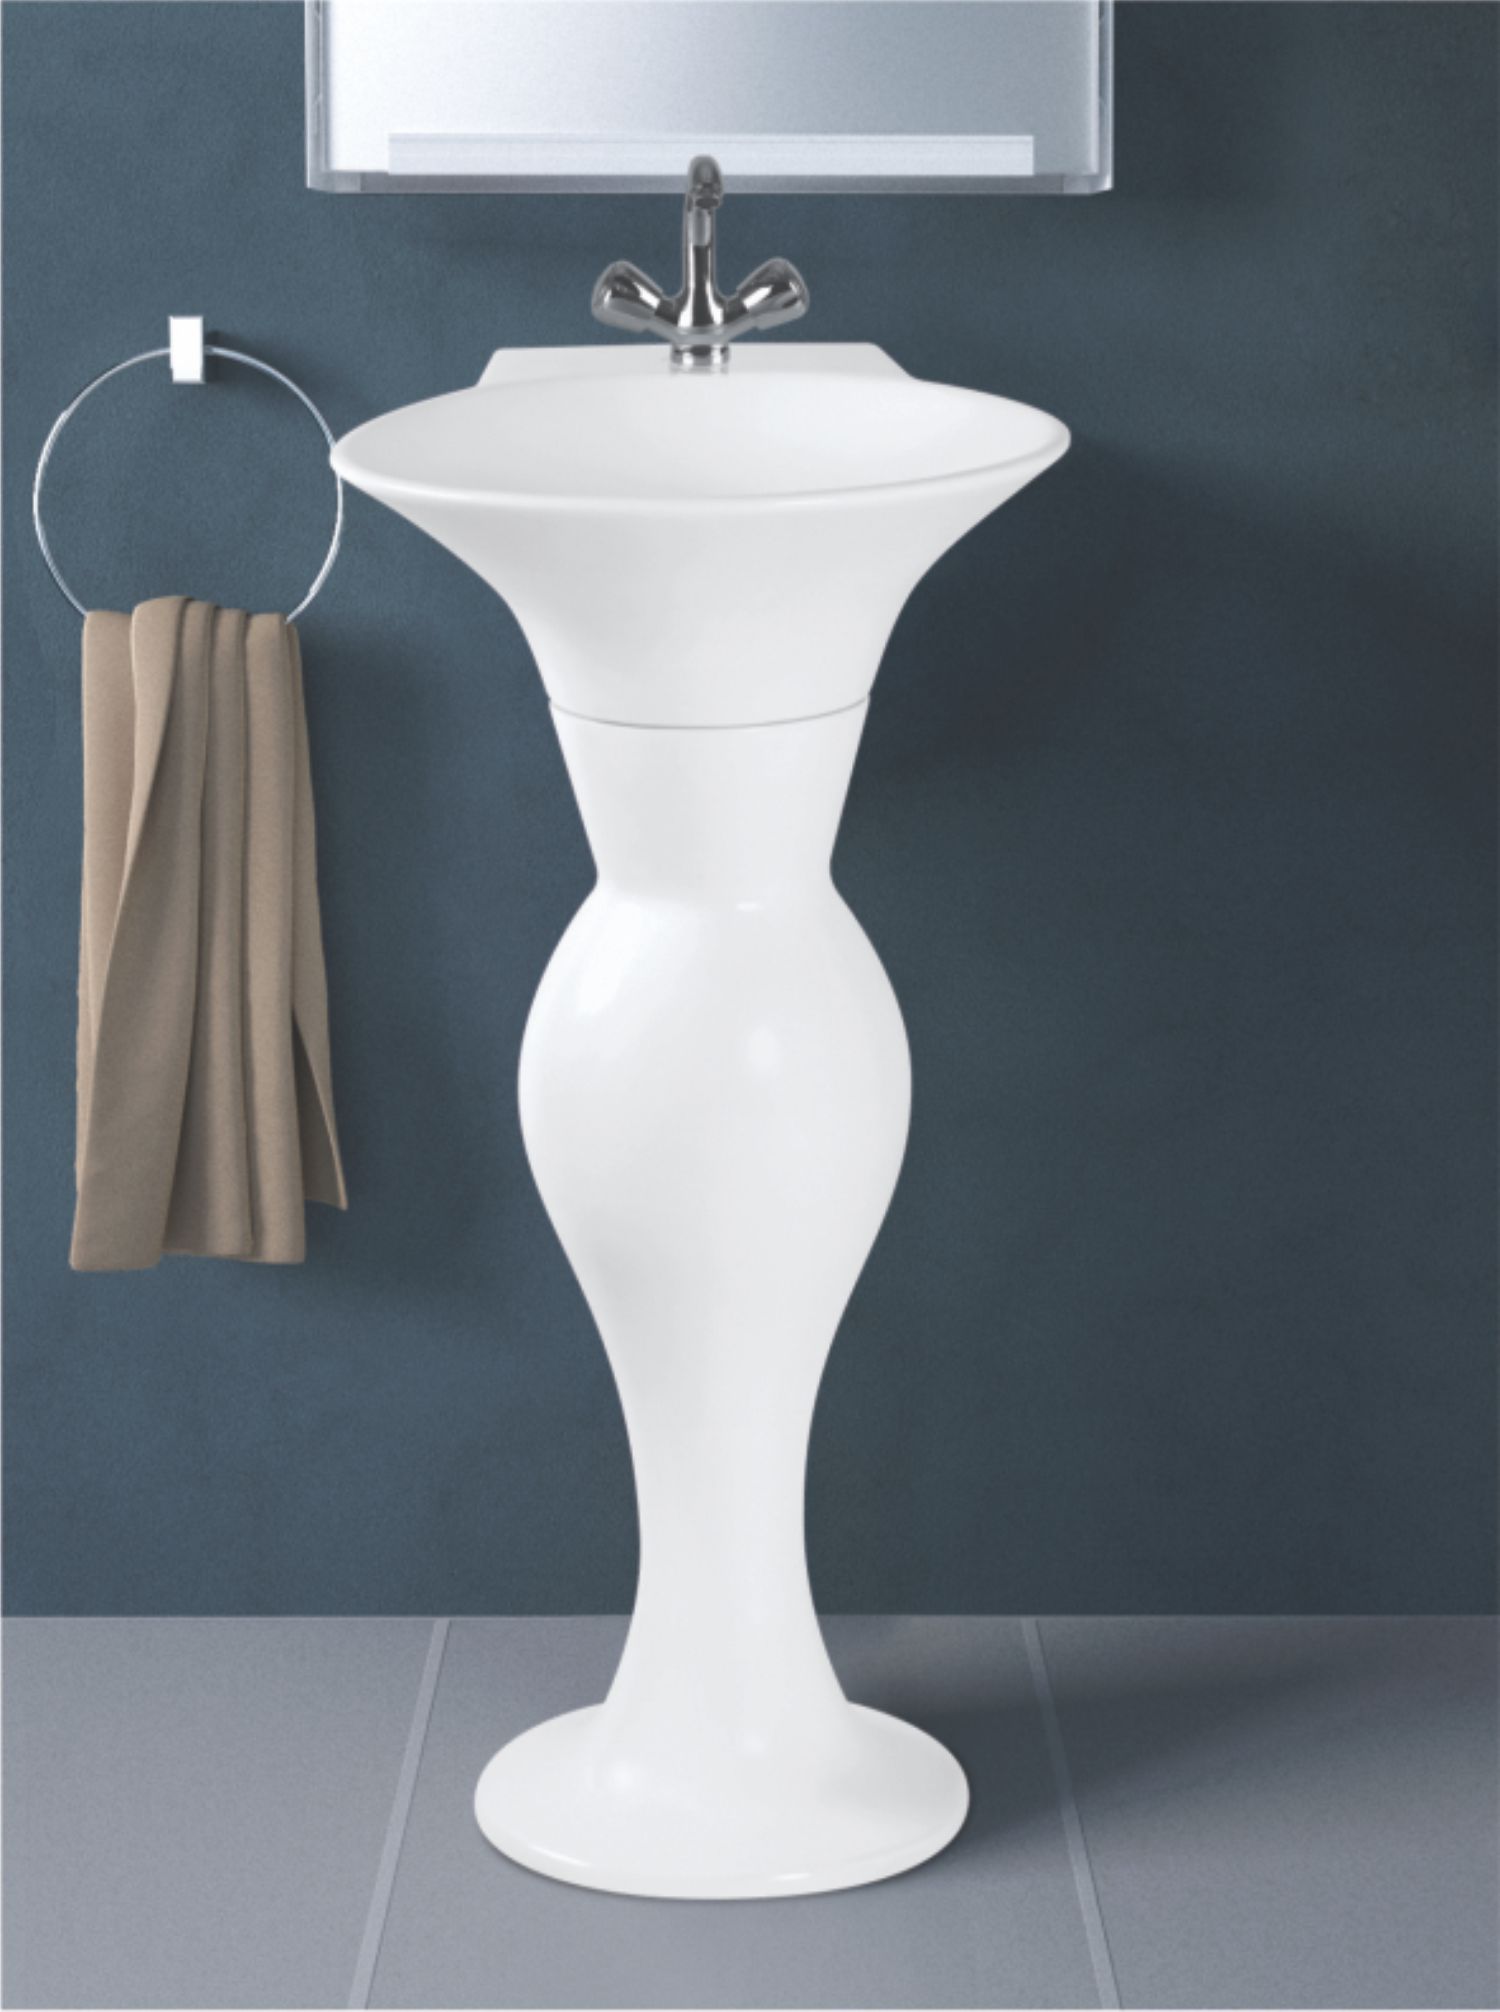 ceramic wash basin with pedestal